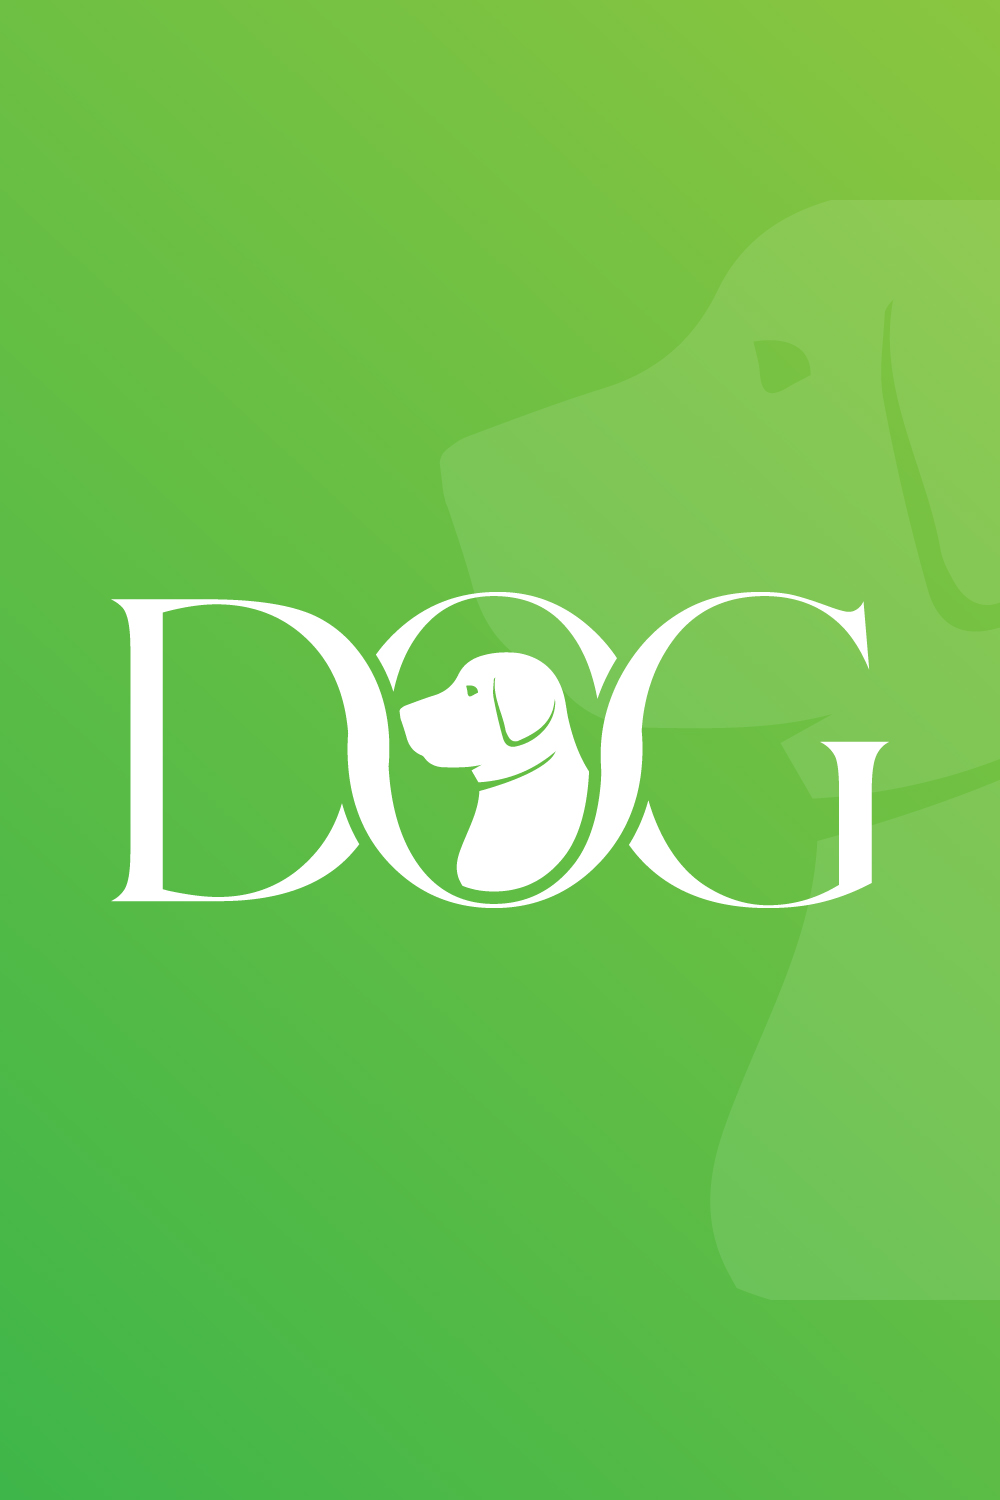 DOG logo pinterest preview image.